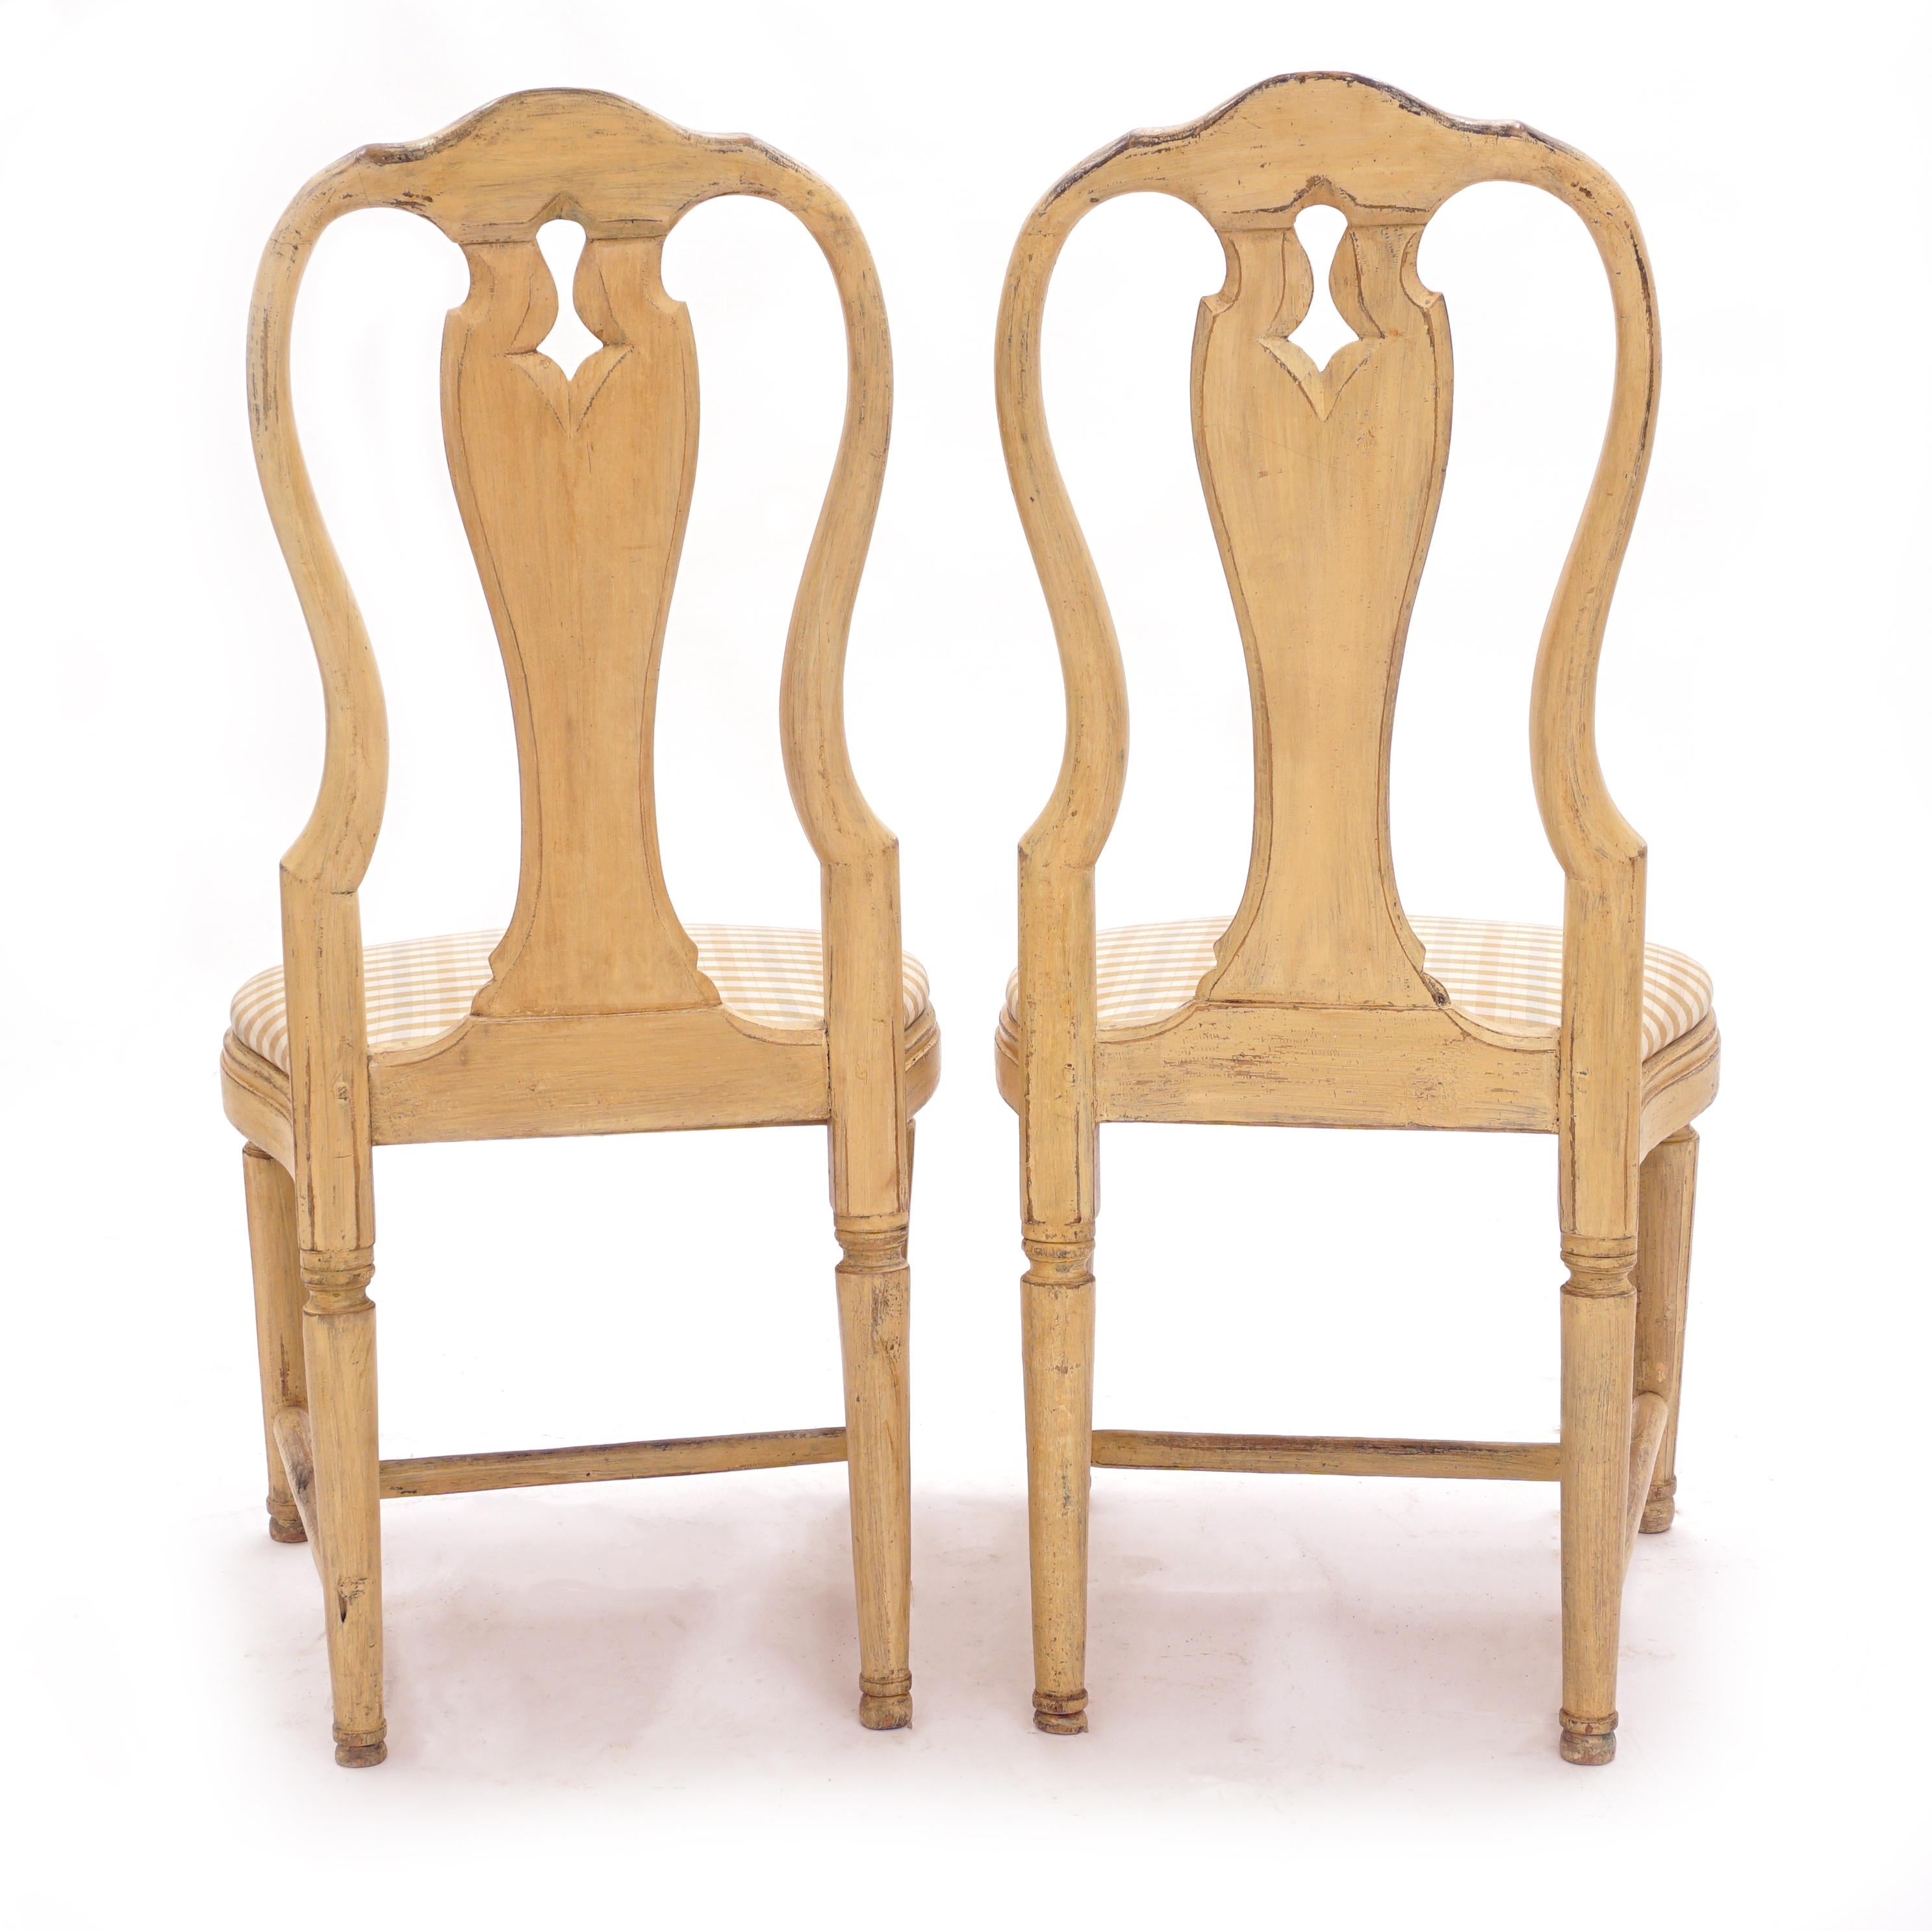 Late 18th century Swedish pair og Gustavian chairs
Sweden circa 1780-1800
Measures: H: 99cm. H seat: 44cm. W: 46cm. D: 43cm.